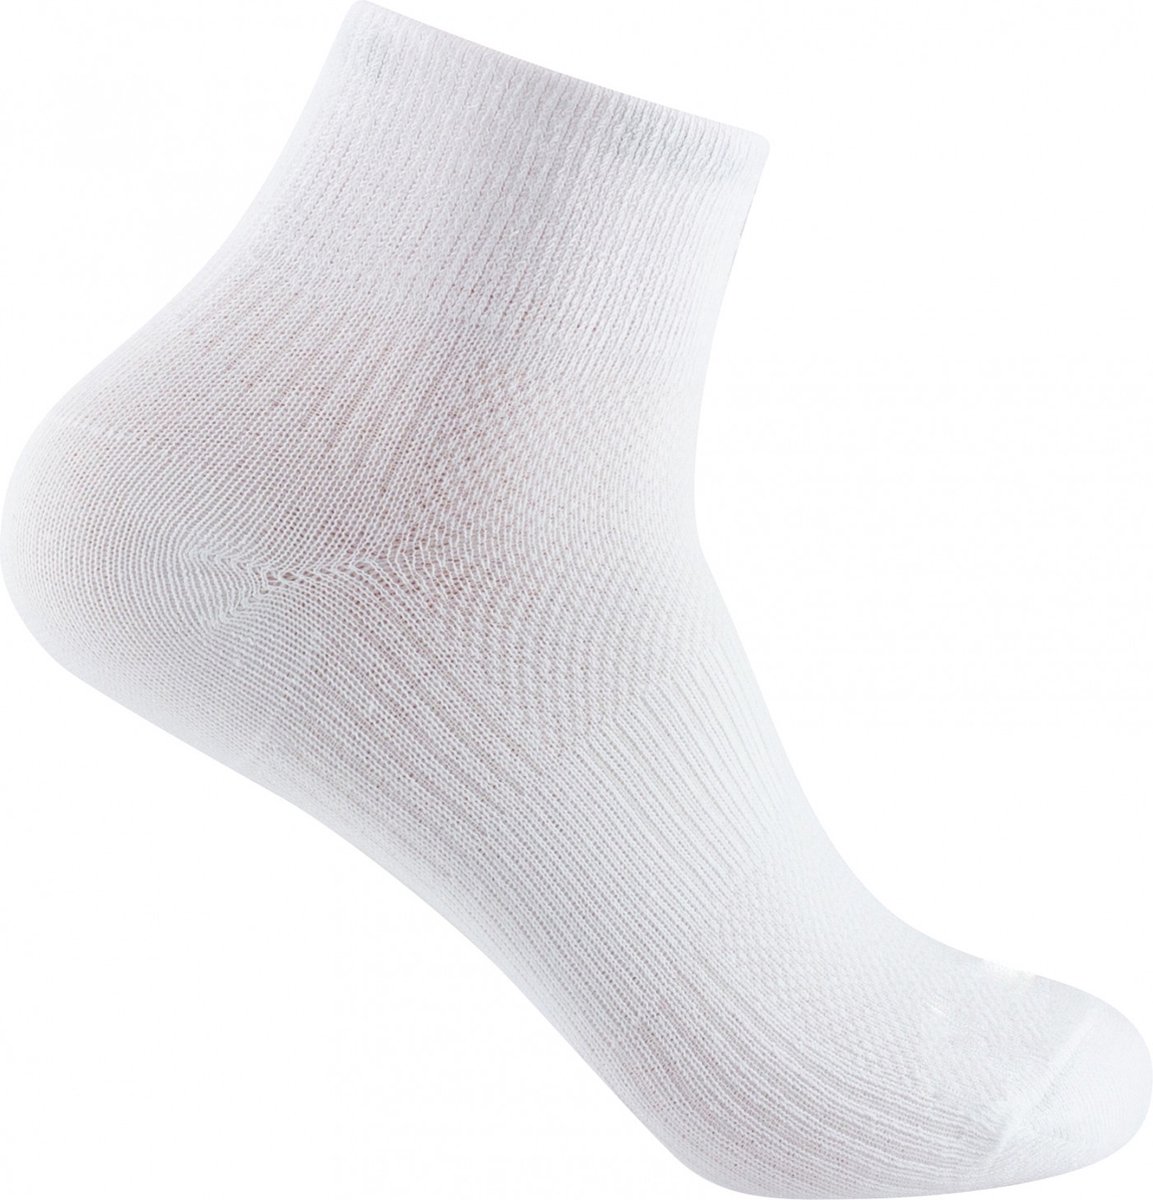 Sportsokken - Wit - 1 paar - maat 38-40.5 - Vitility High Comfort - sokken - wandelsokken